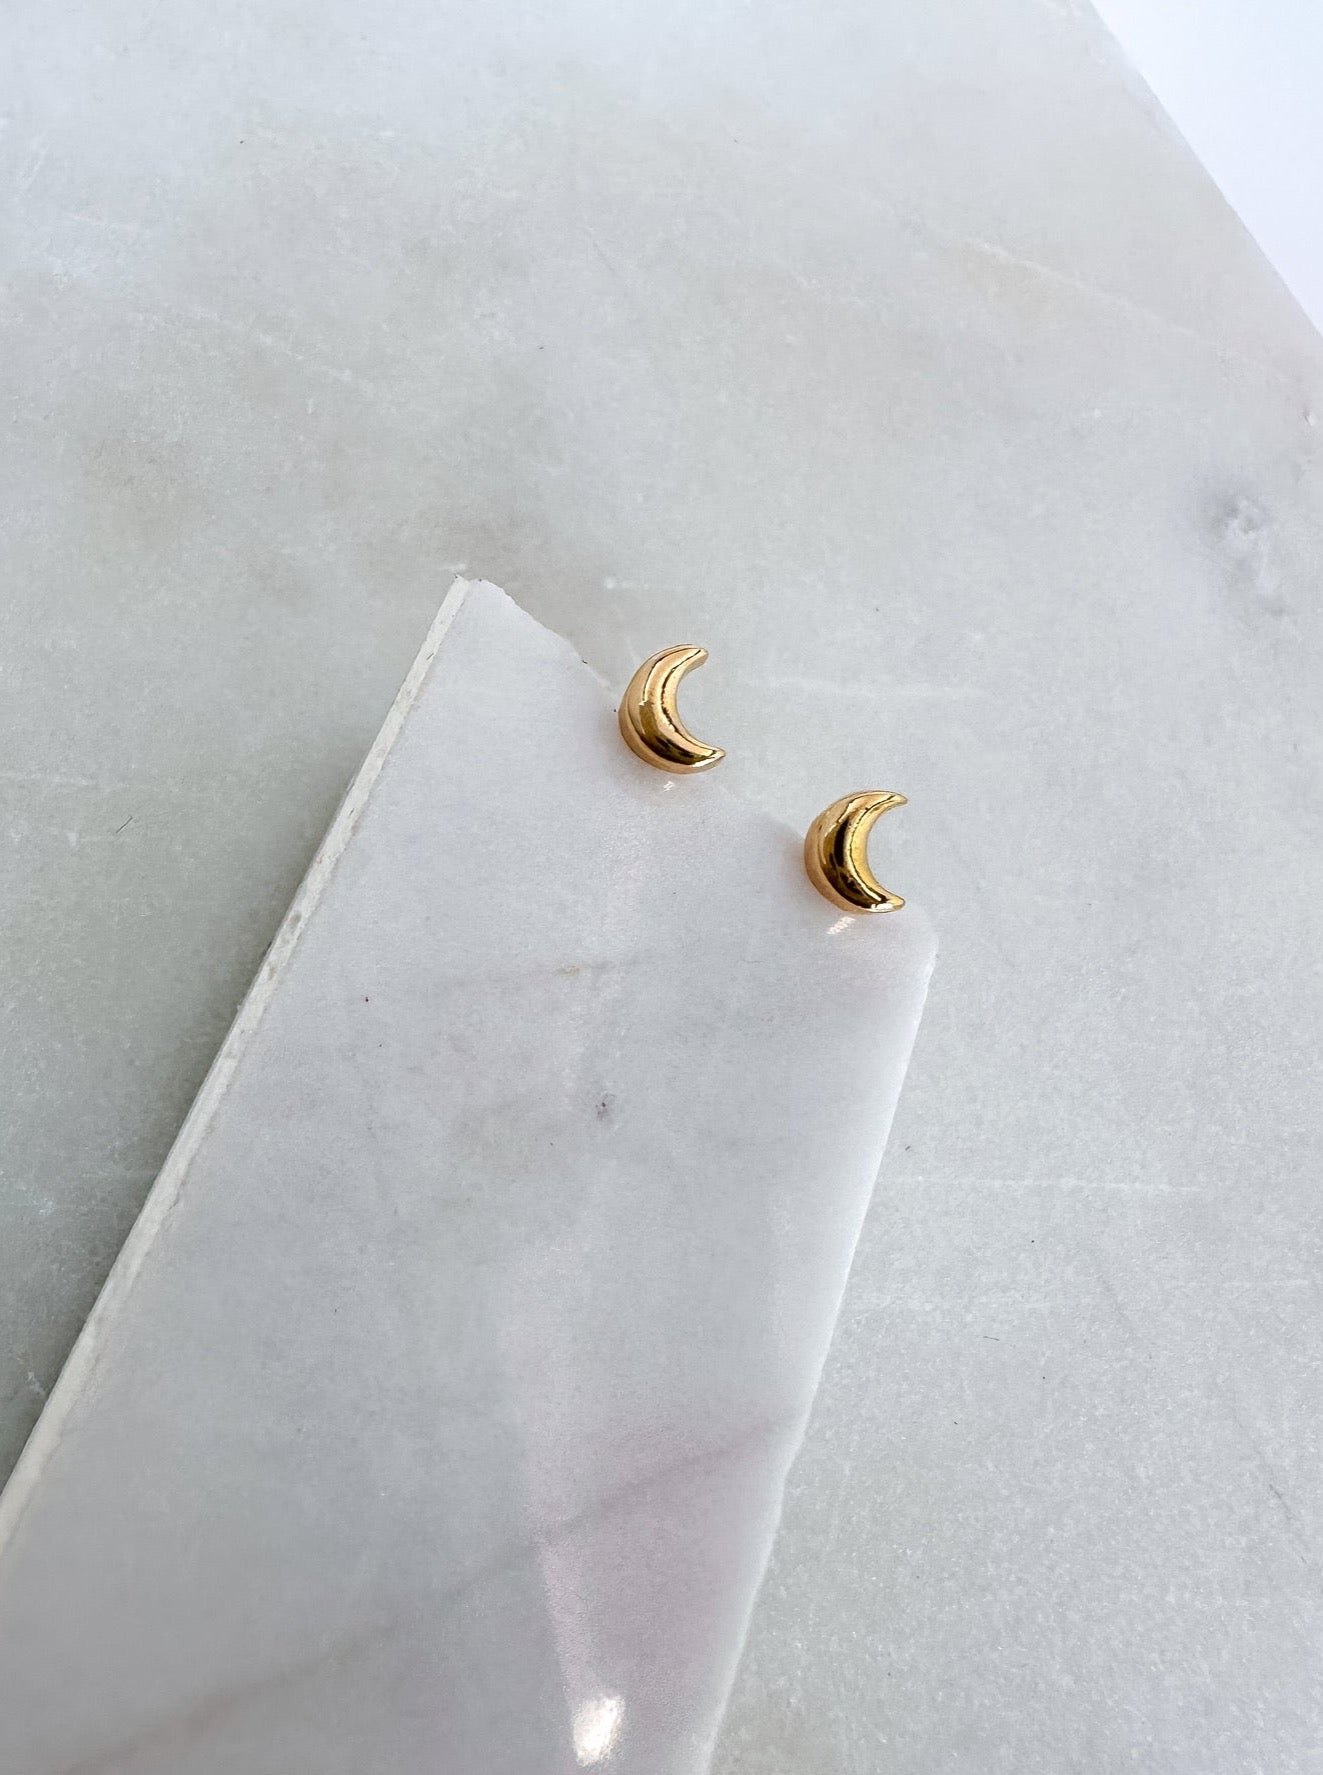 Mini Crescent Moon Stud Earrings